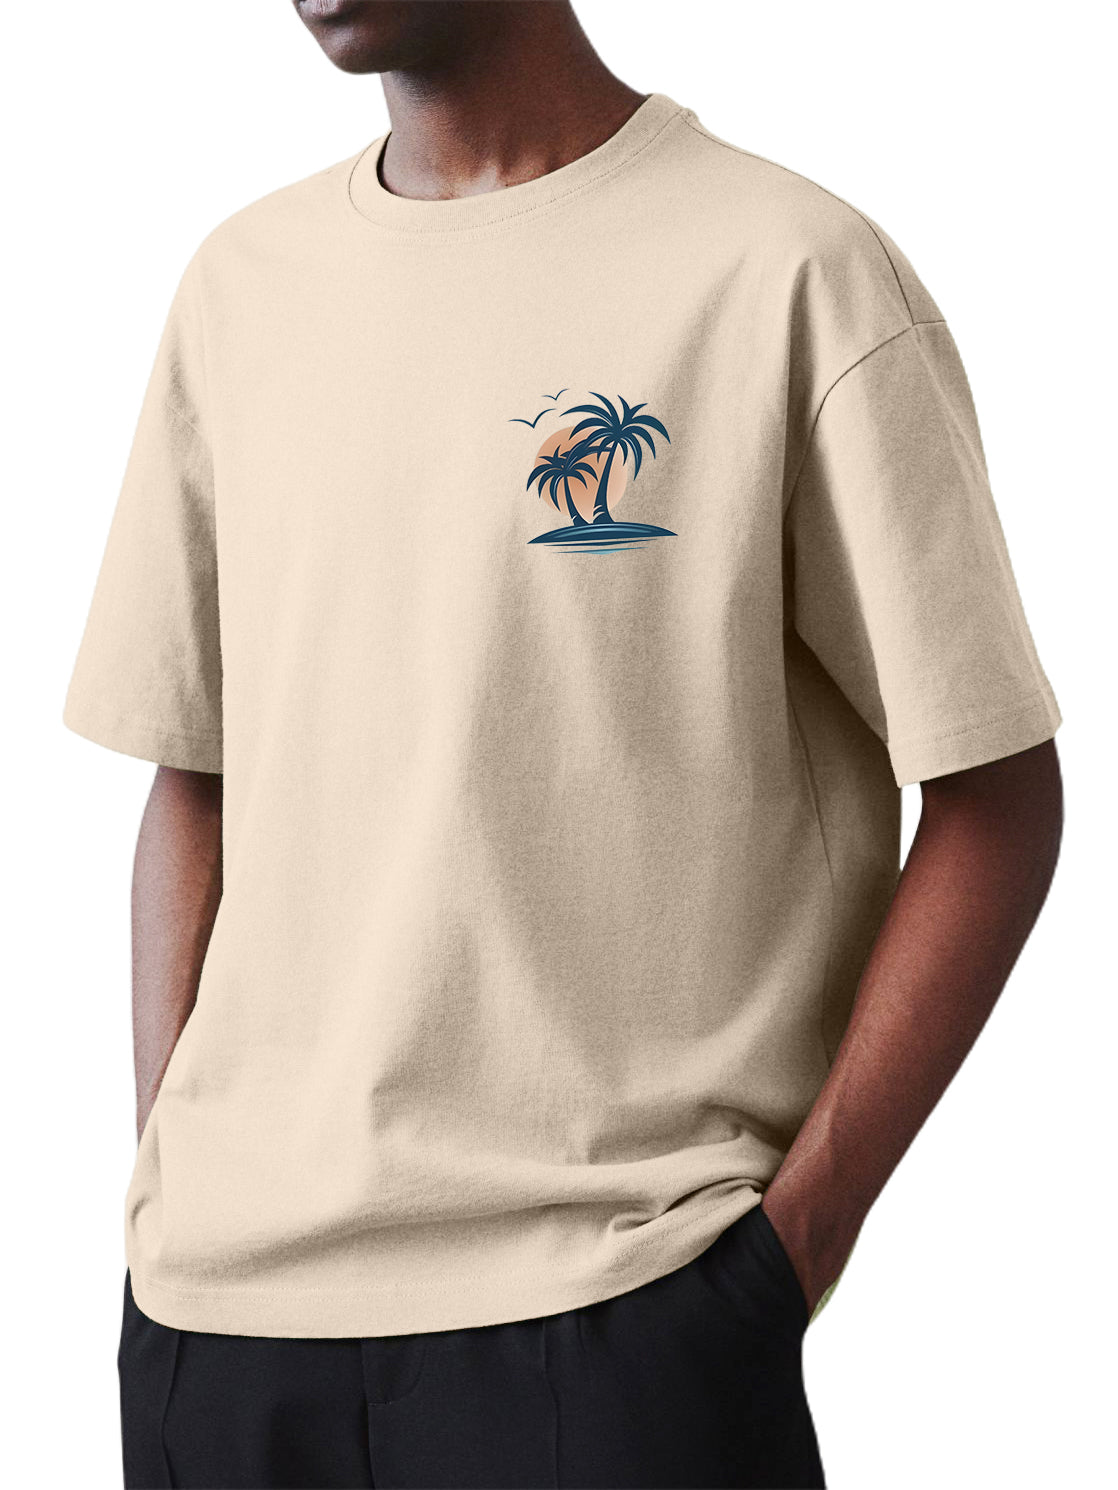 Men's 100% Cotton Basic Casual Palm Tree Print Everyday Short Sleeve T-Shirt